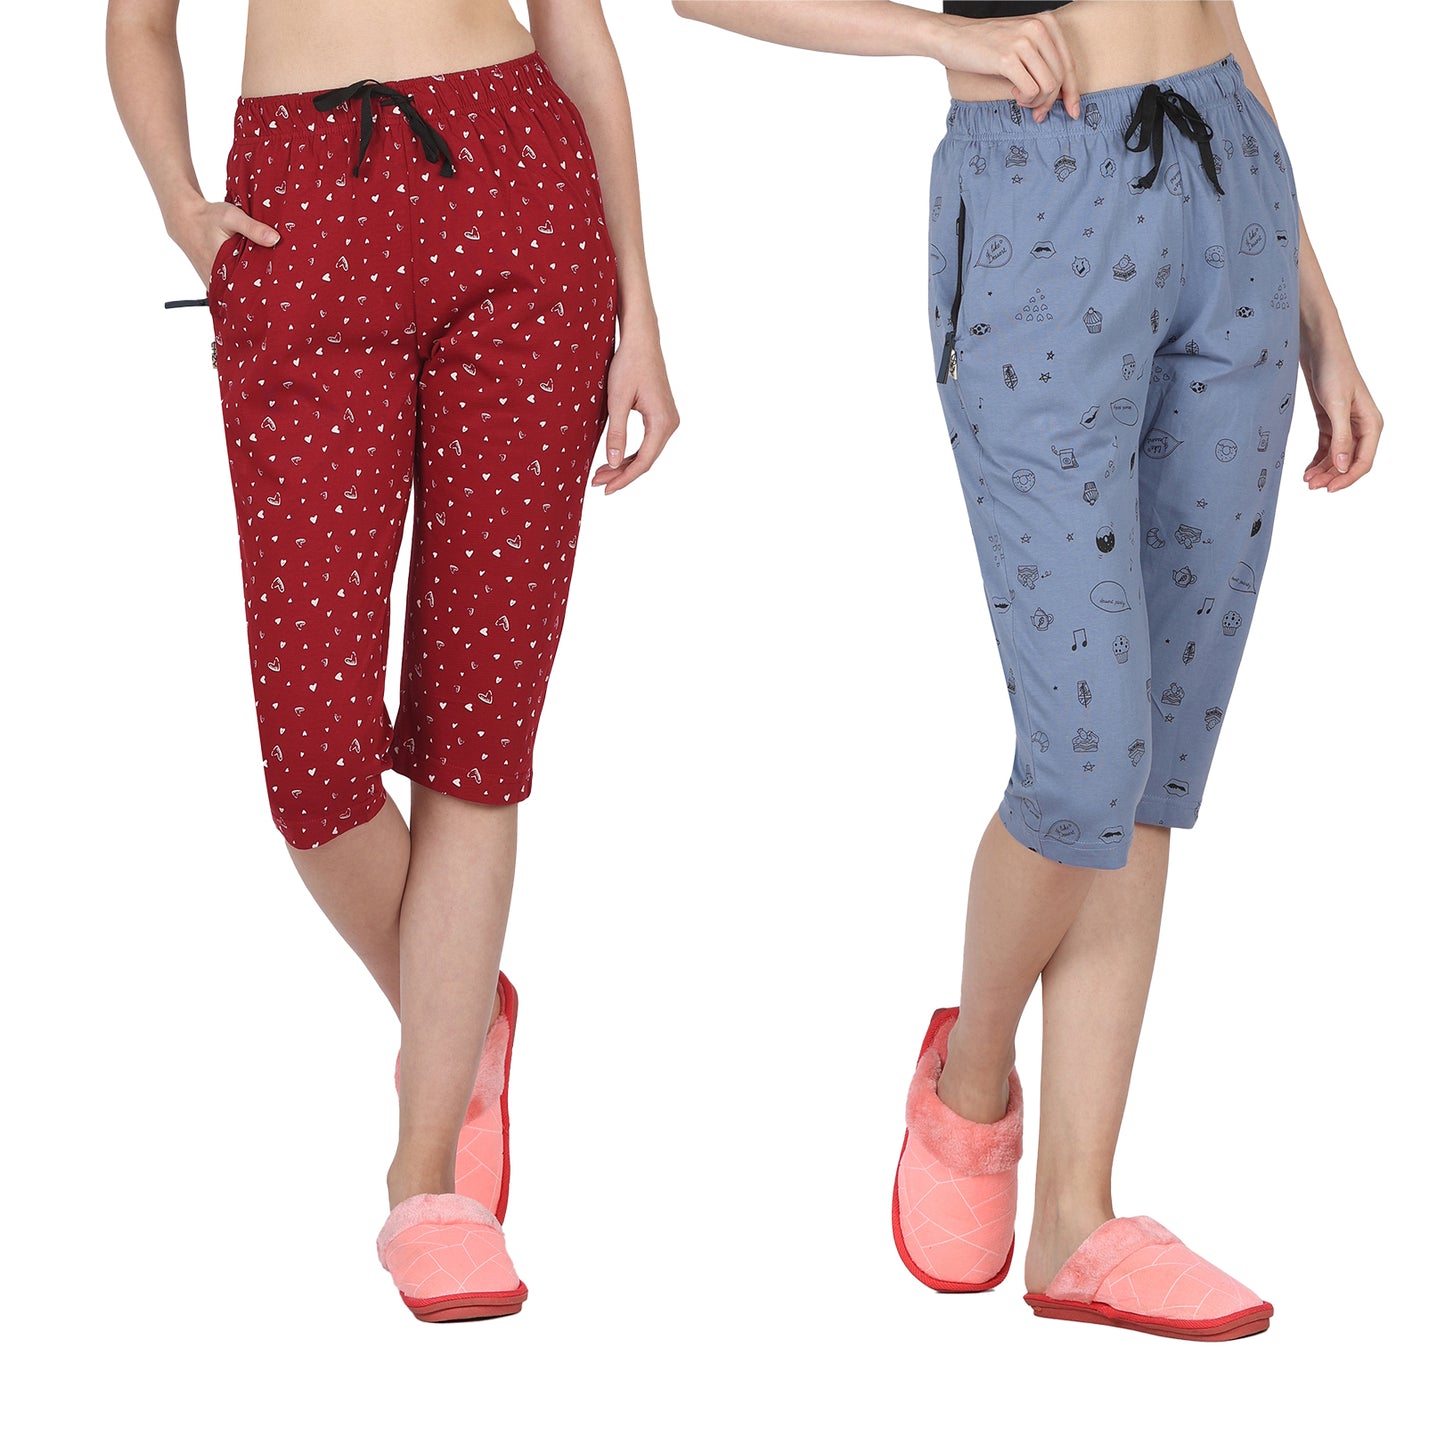 Eazy Women's Printed Capri Pants- Pack of 2- Cherry Red & Steel Blue